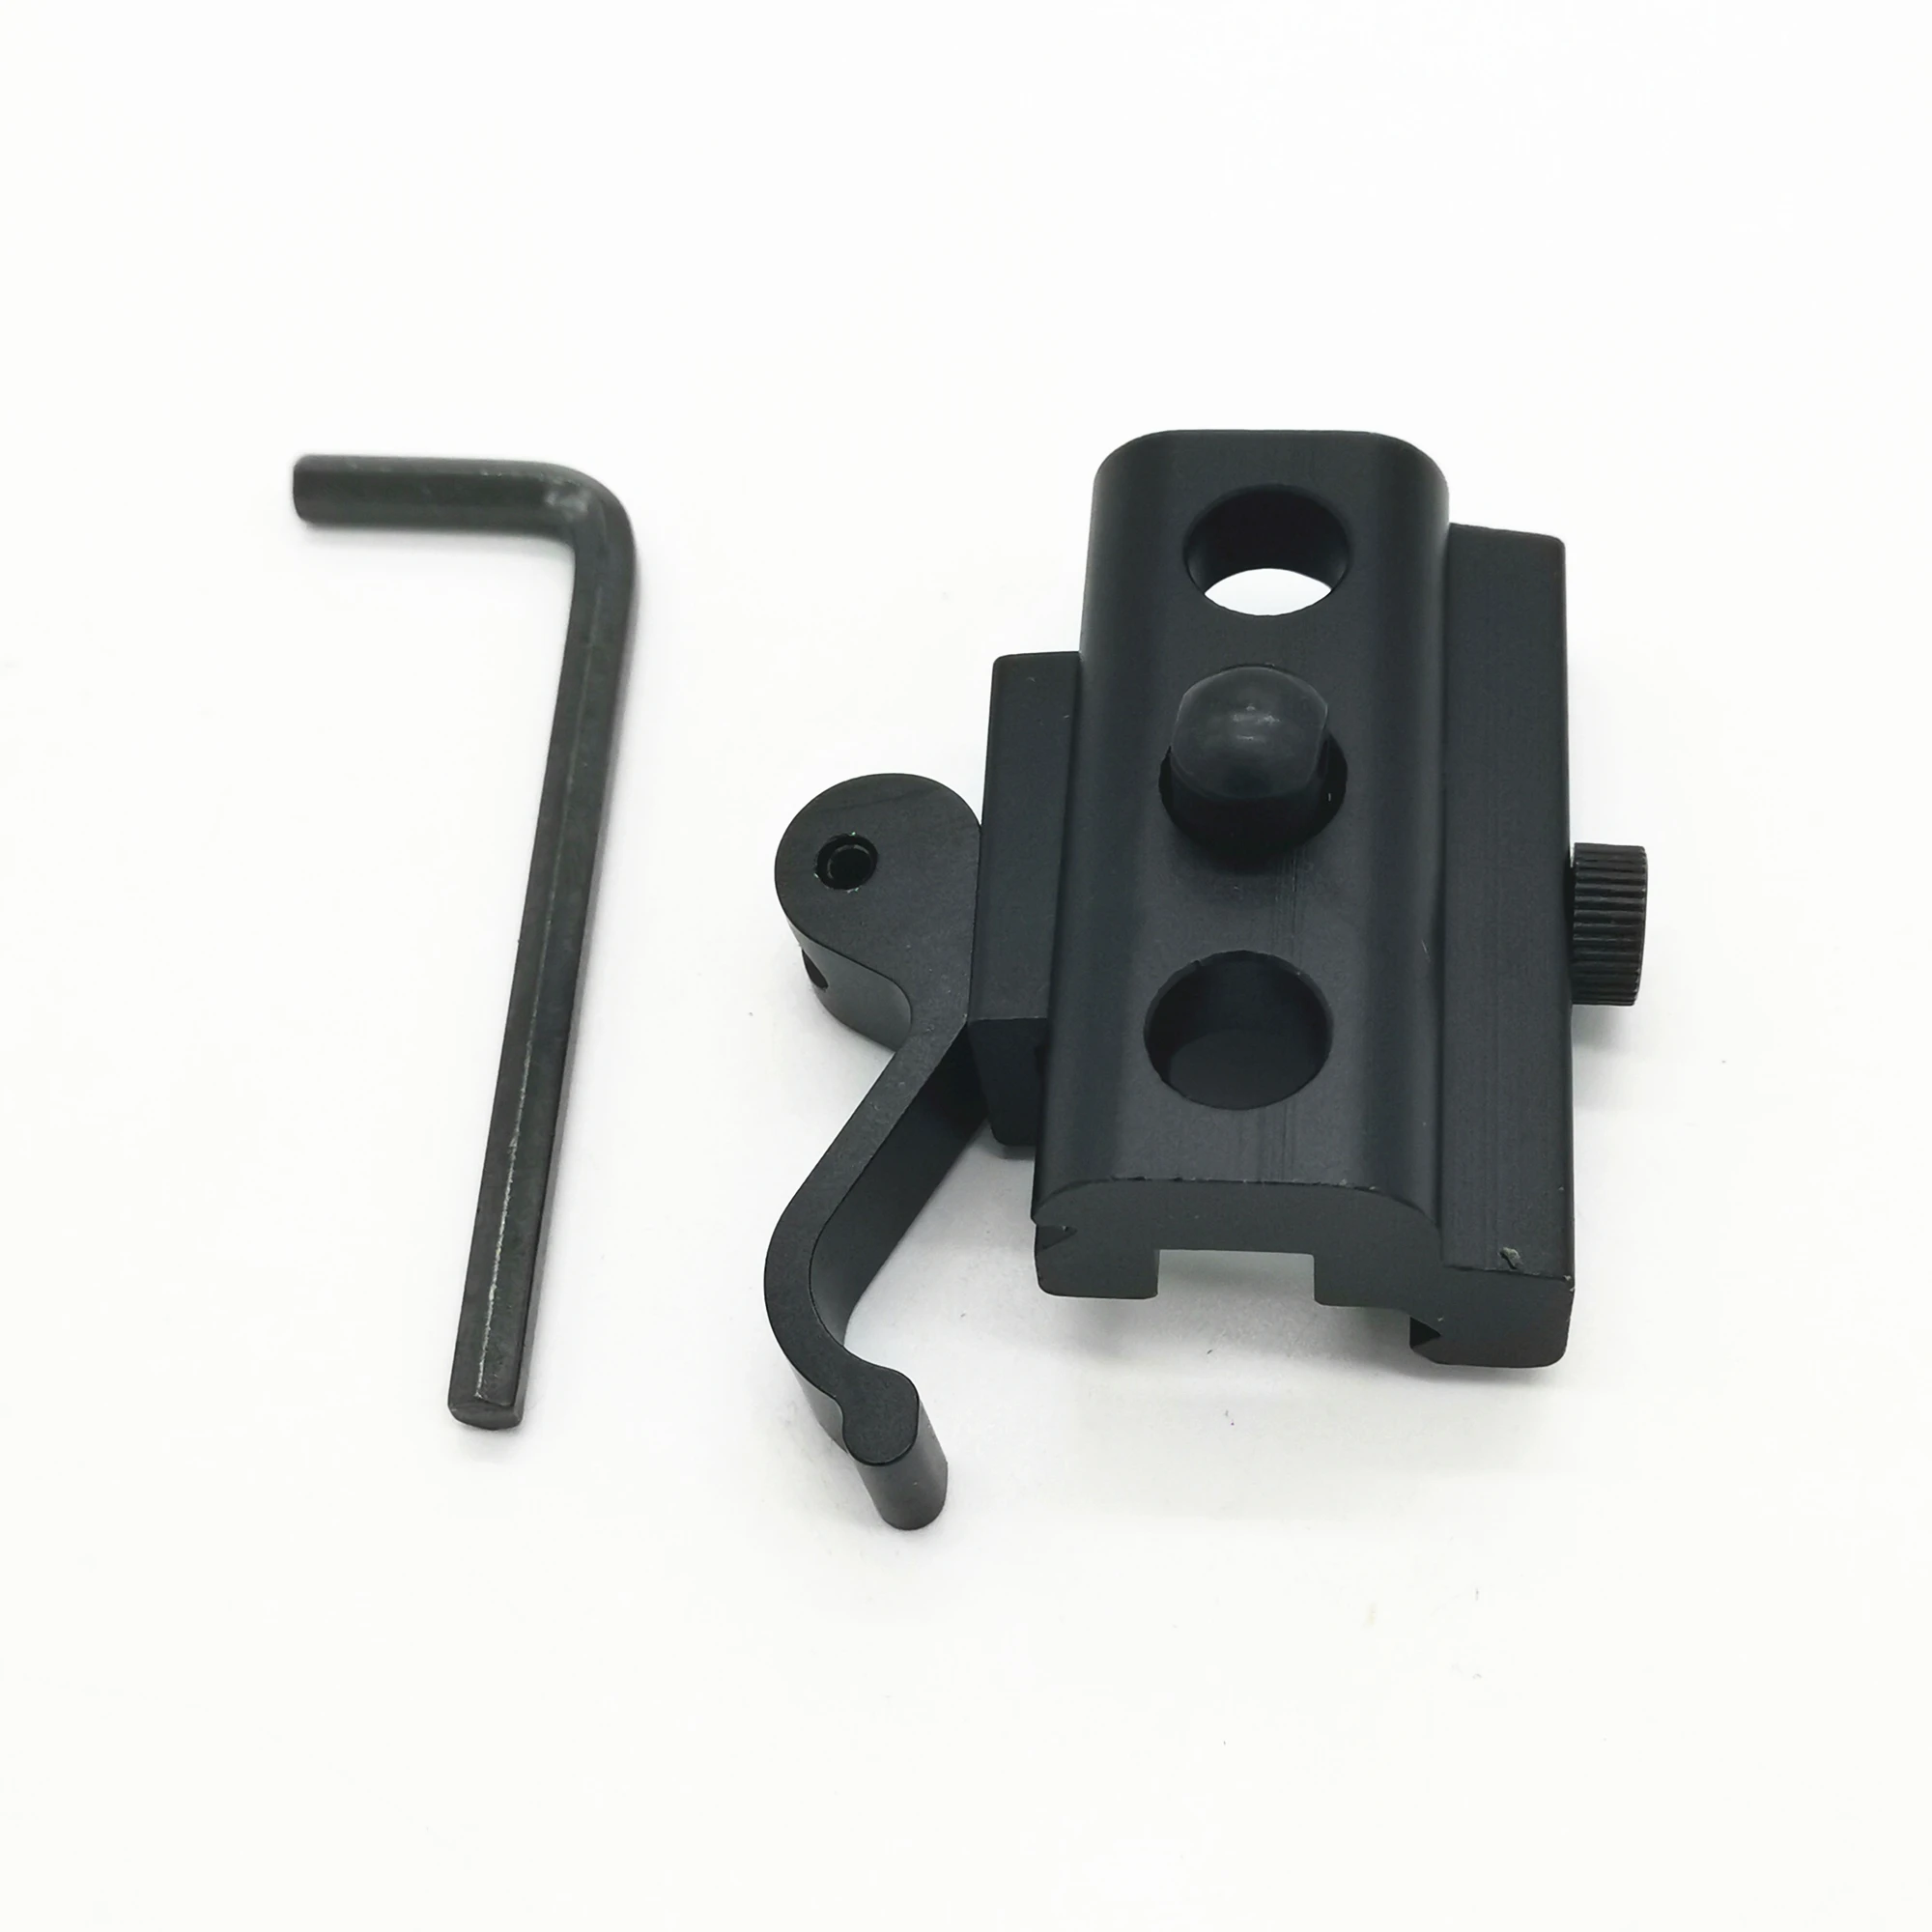 Sling Swivel Stud zu 20mm Picatinny-Weaver Schiene Adapter für Harris-Stil 